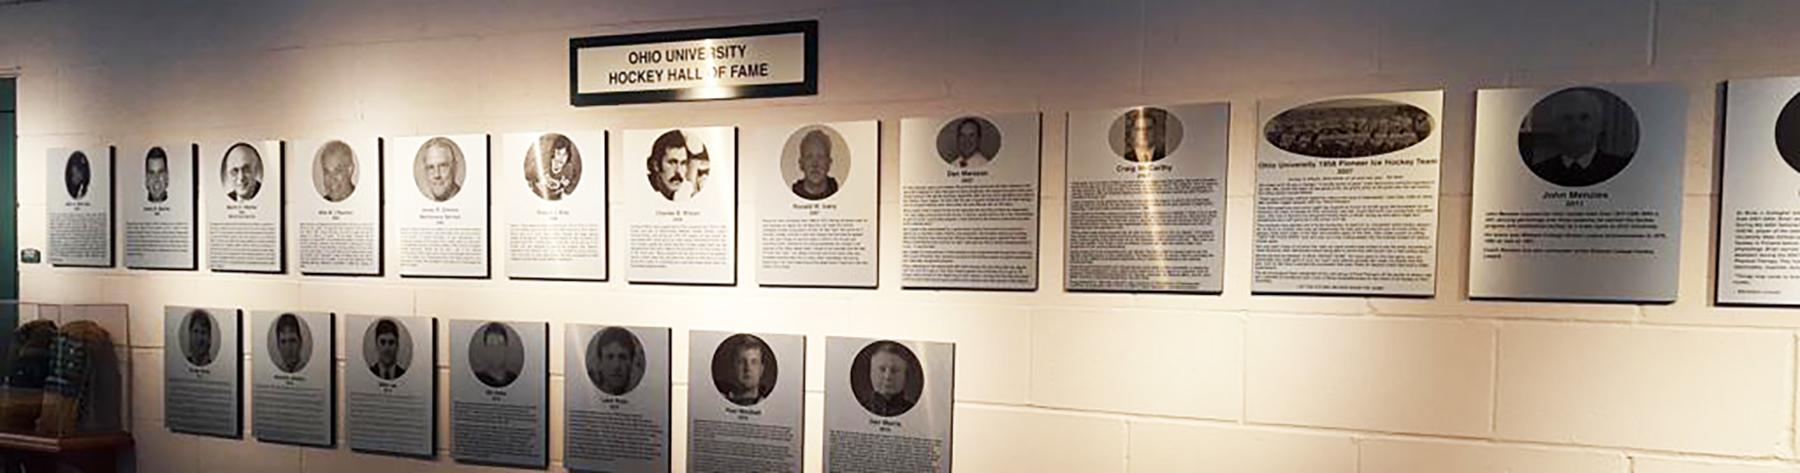 OHIO Hockey hall of fame plaques line the hallway